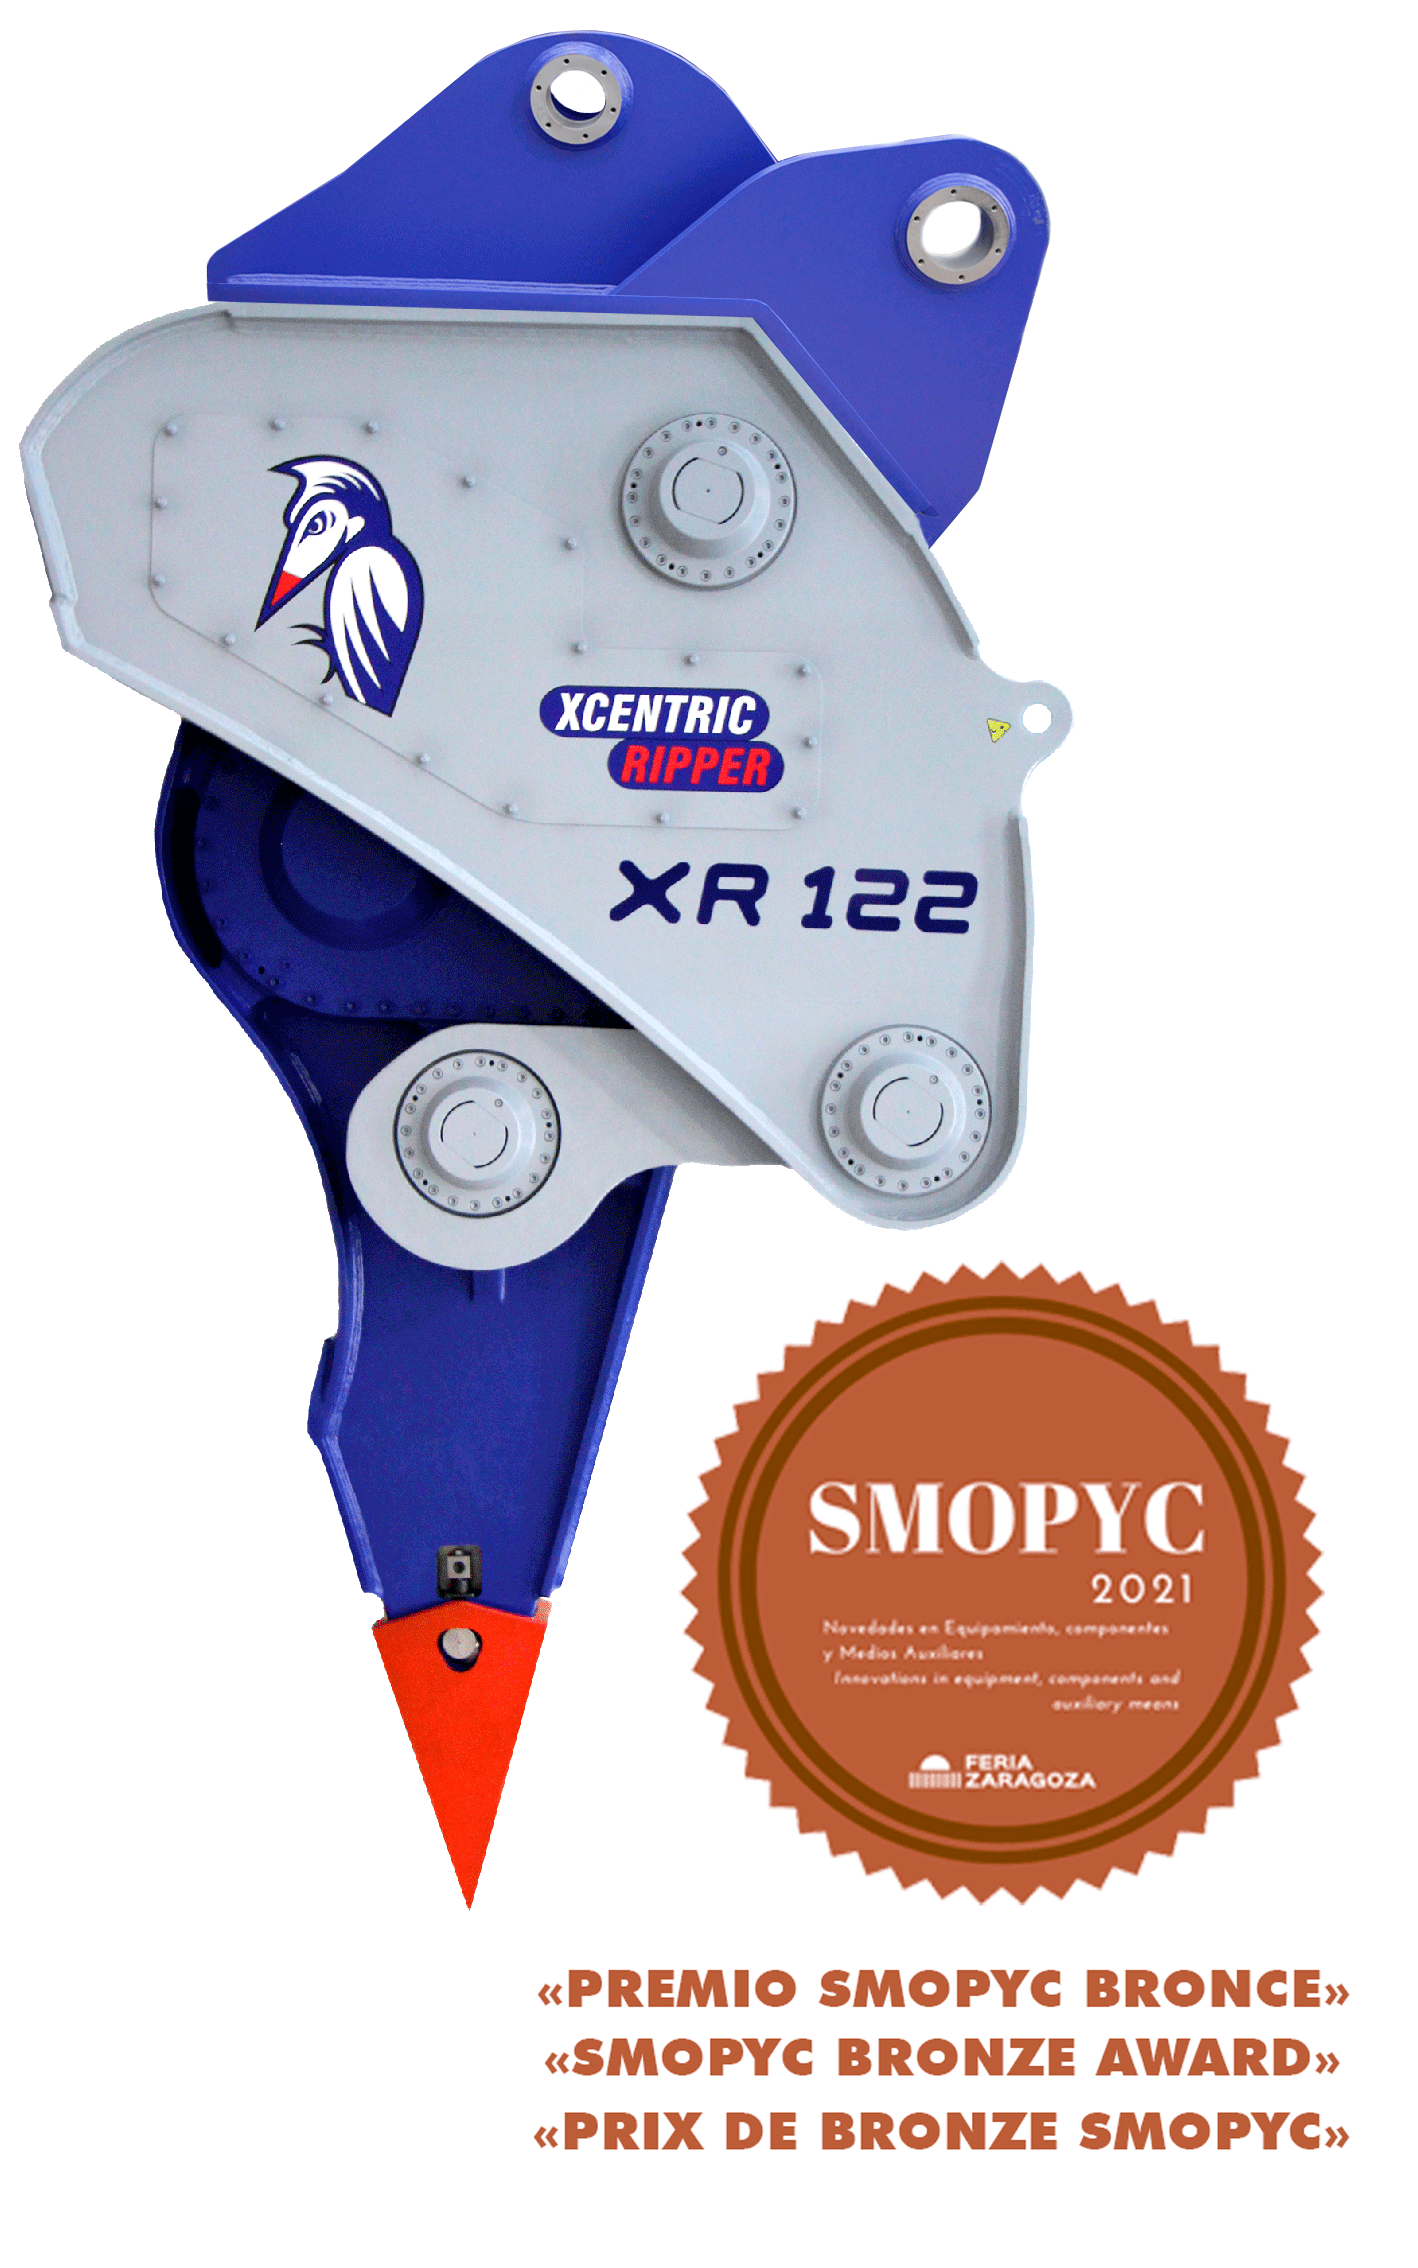 XCENTRIC RIPPER XR122 PREMIO SMOPYC BRONCE 2021